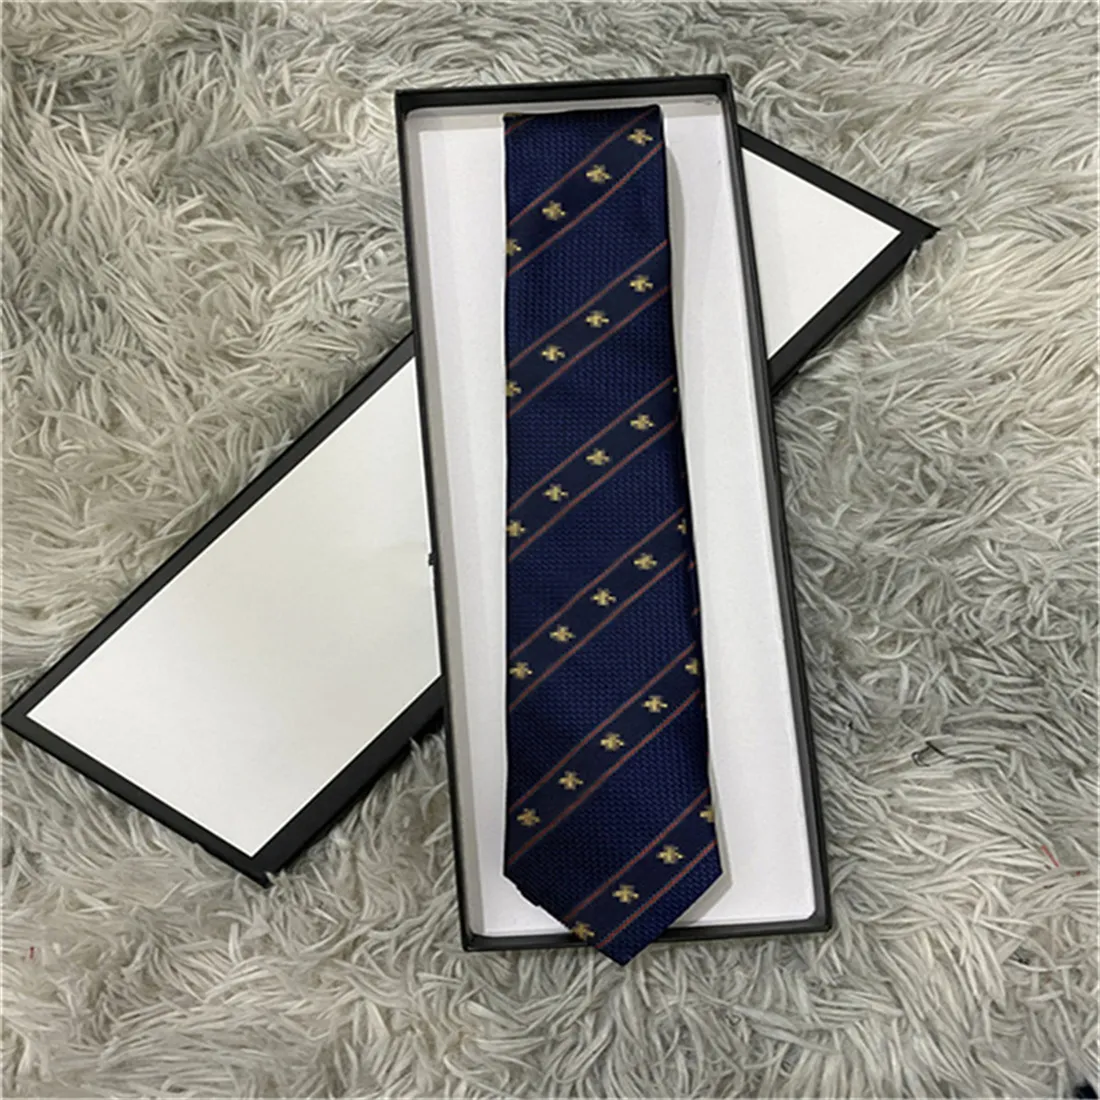 Luxury New Designer Men's Letter 100% Tie Silk Necktie black blue Aldult Jacquard Party Wedding Business Woven Fashion Design Hawaii Neck Ties With box 1130